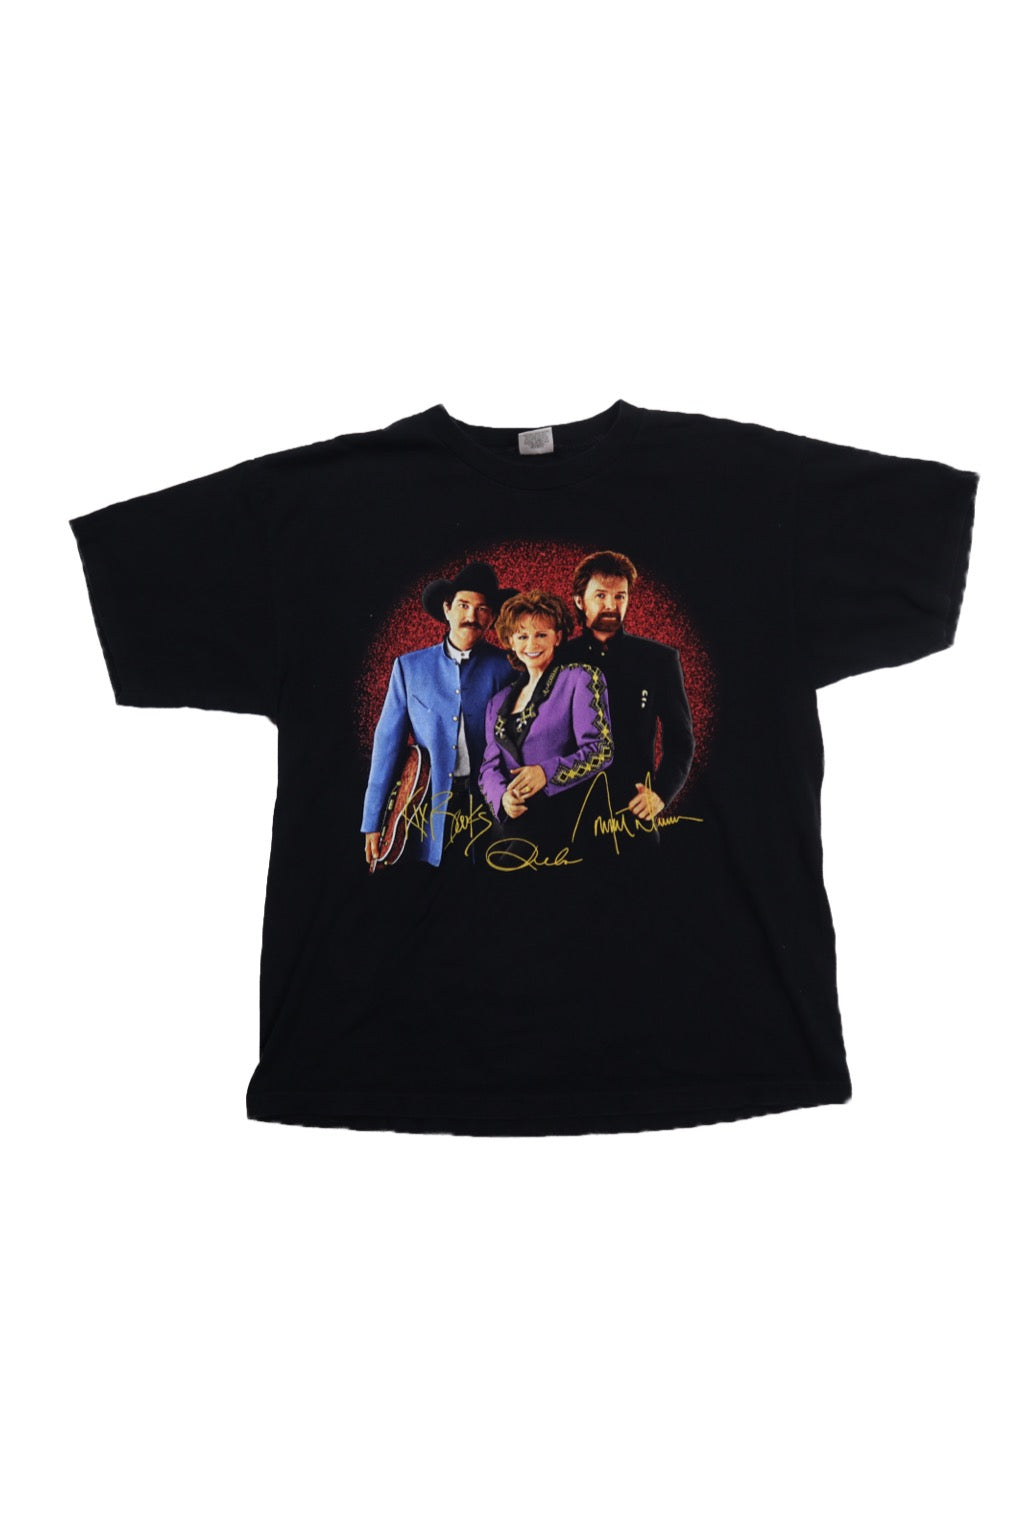 Brooks and Dunn and Reba 1997 T-Shirt Grail (XL)